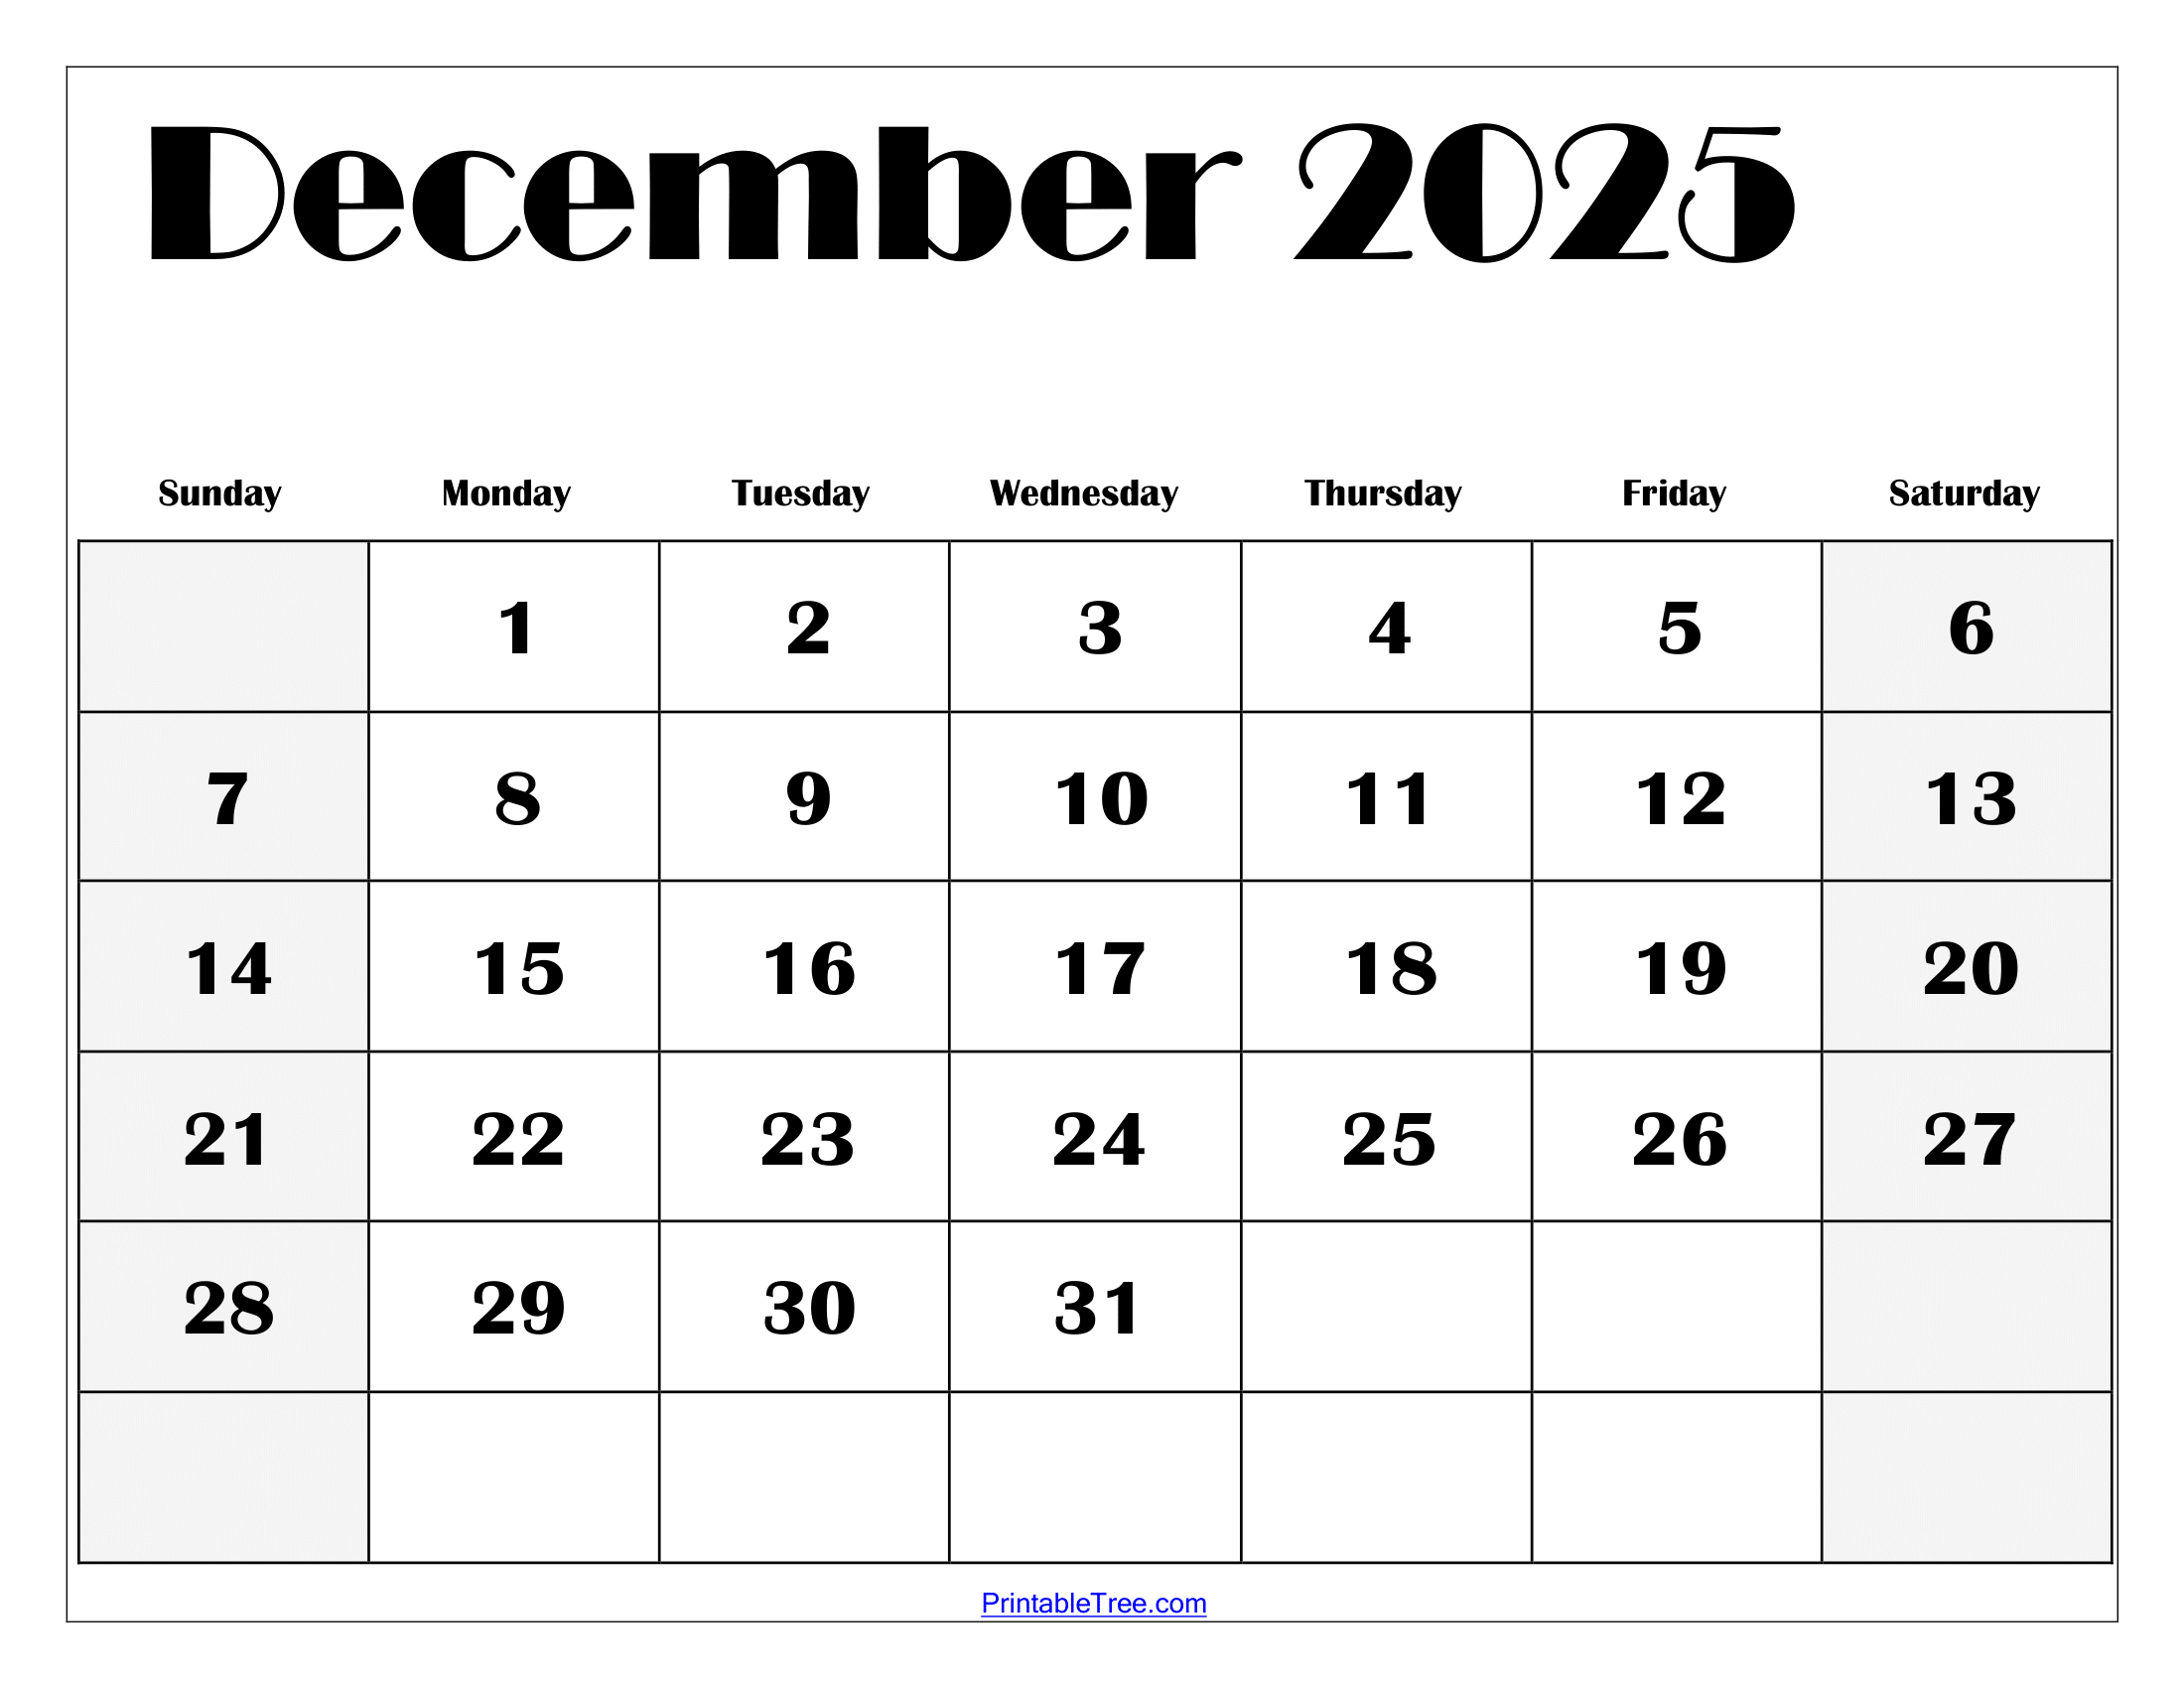 December calendar printable pdf template with holidays